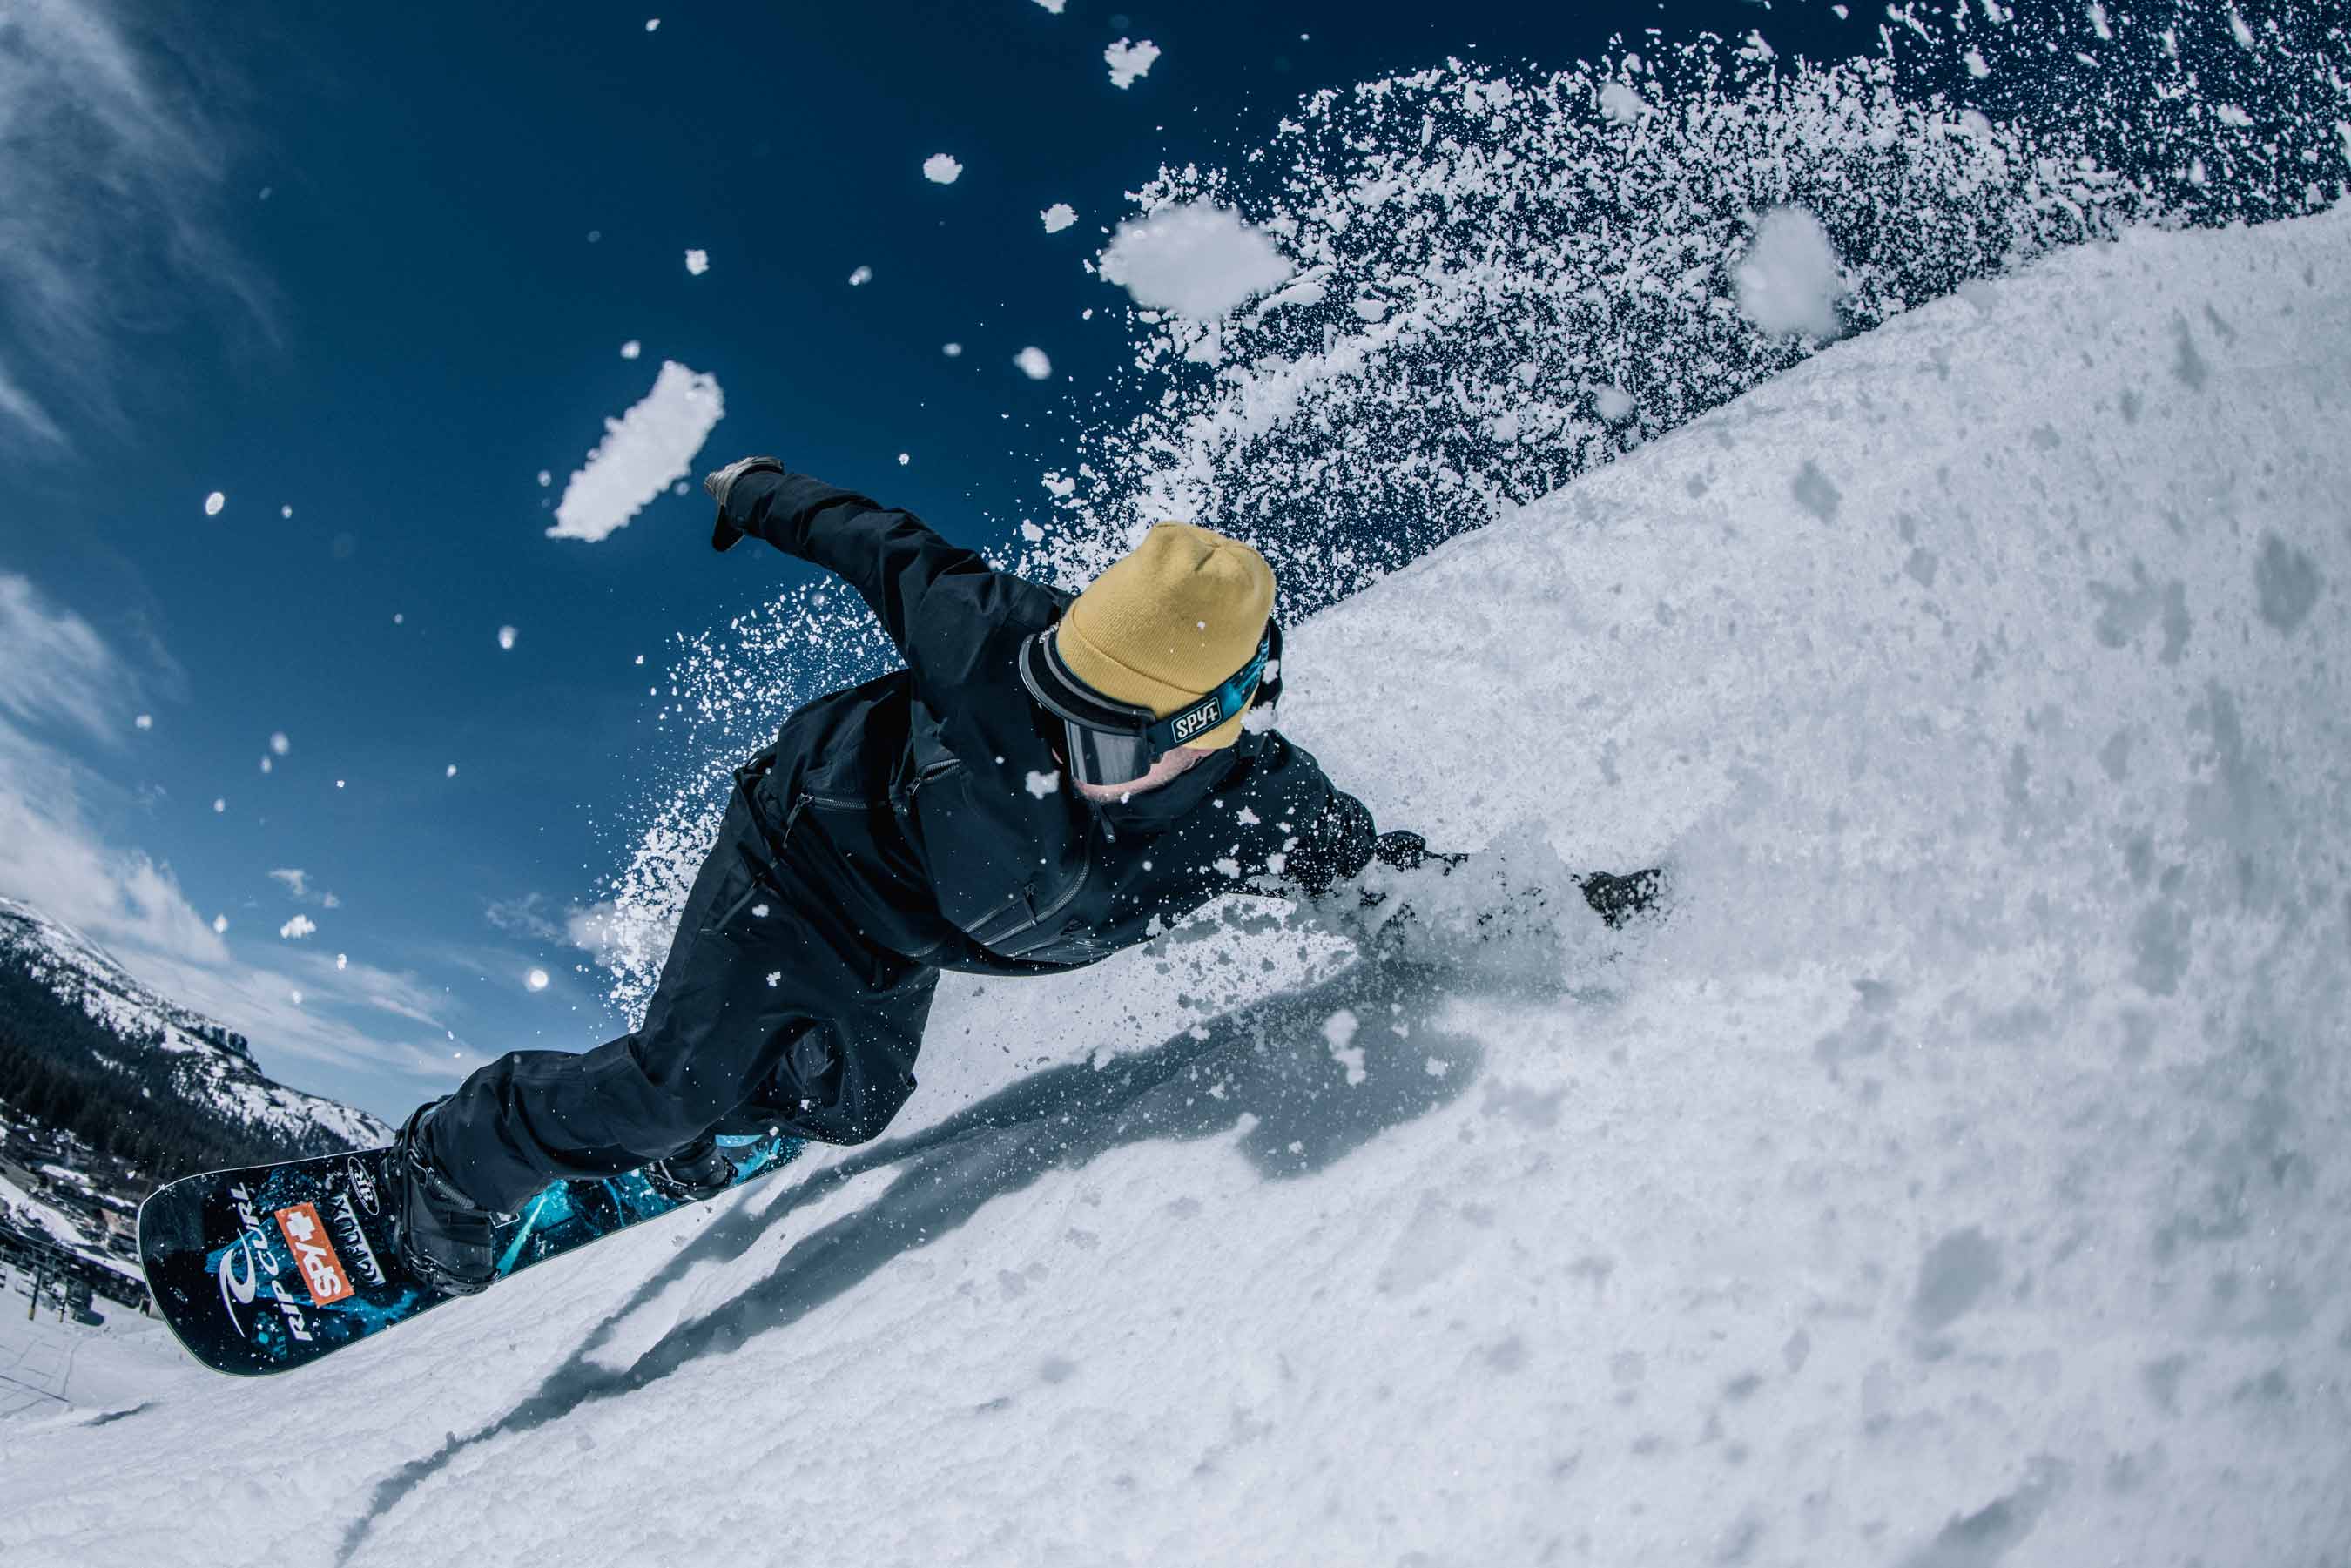 Chris Rasman Snowboarding with the Marauder Snow Goggle